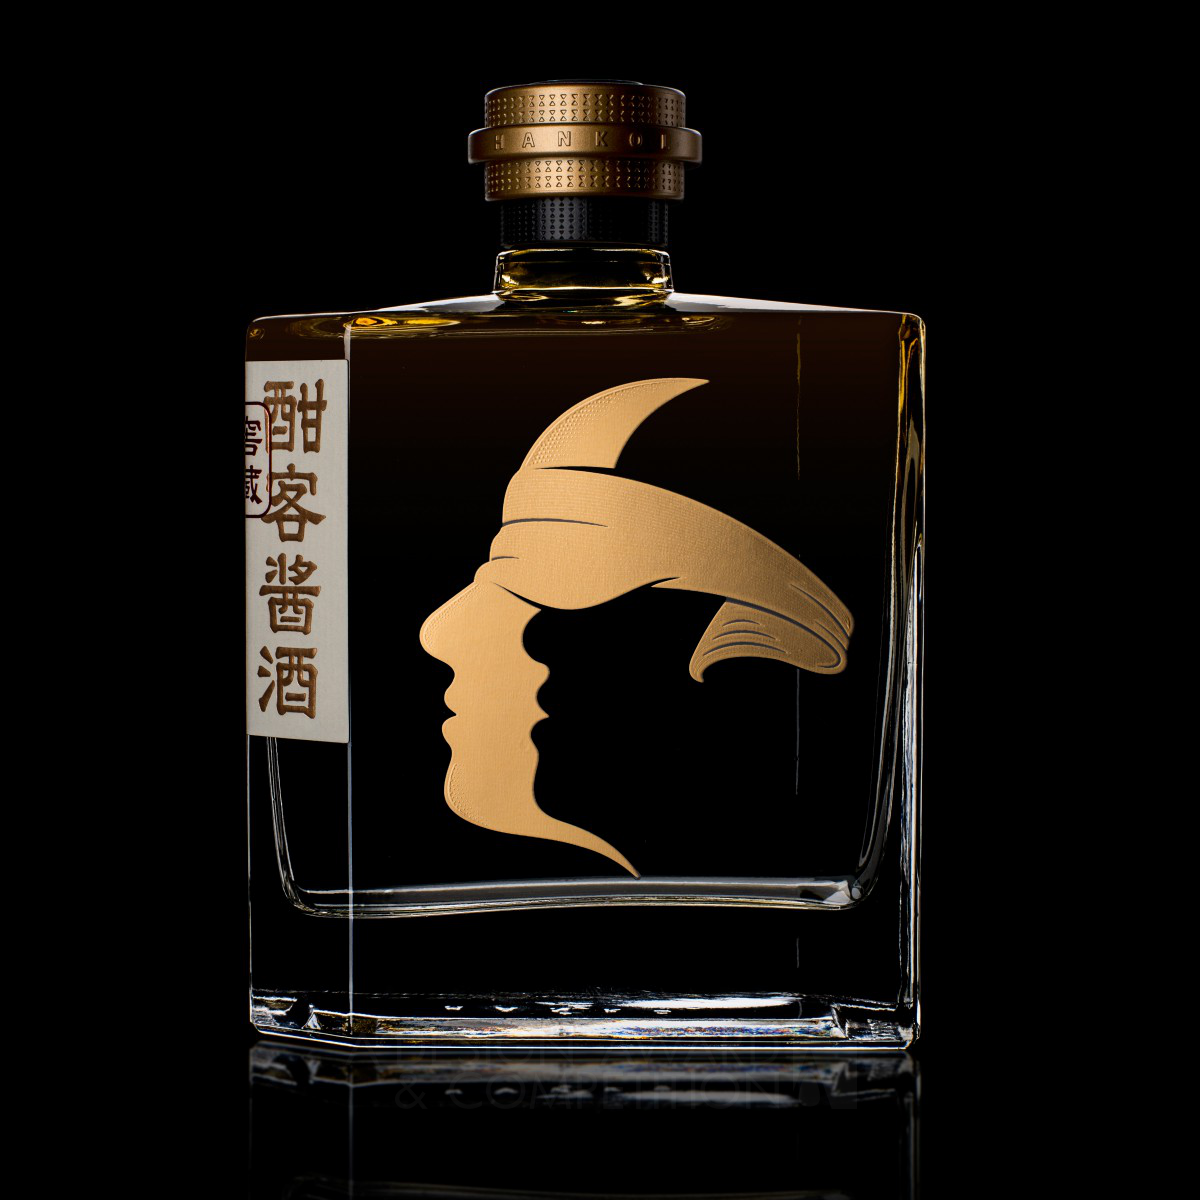 Hankol Liquor Packaging Design by Chen Yue